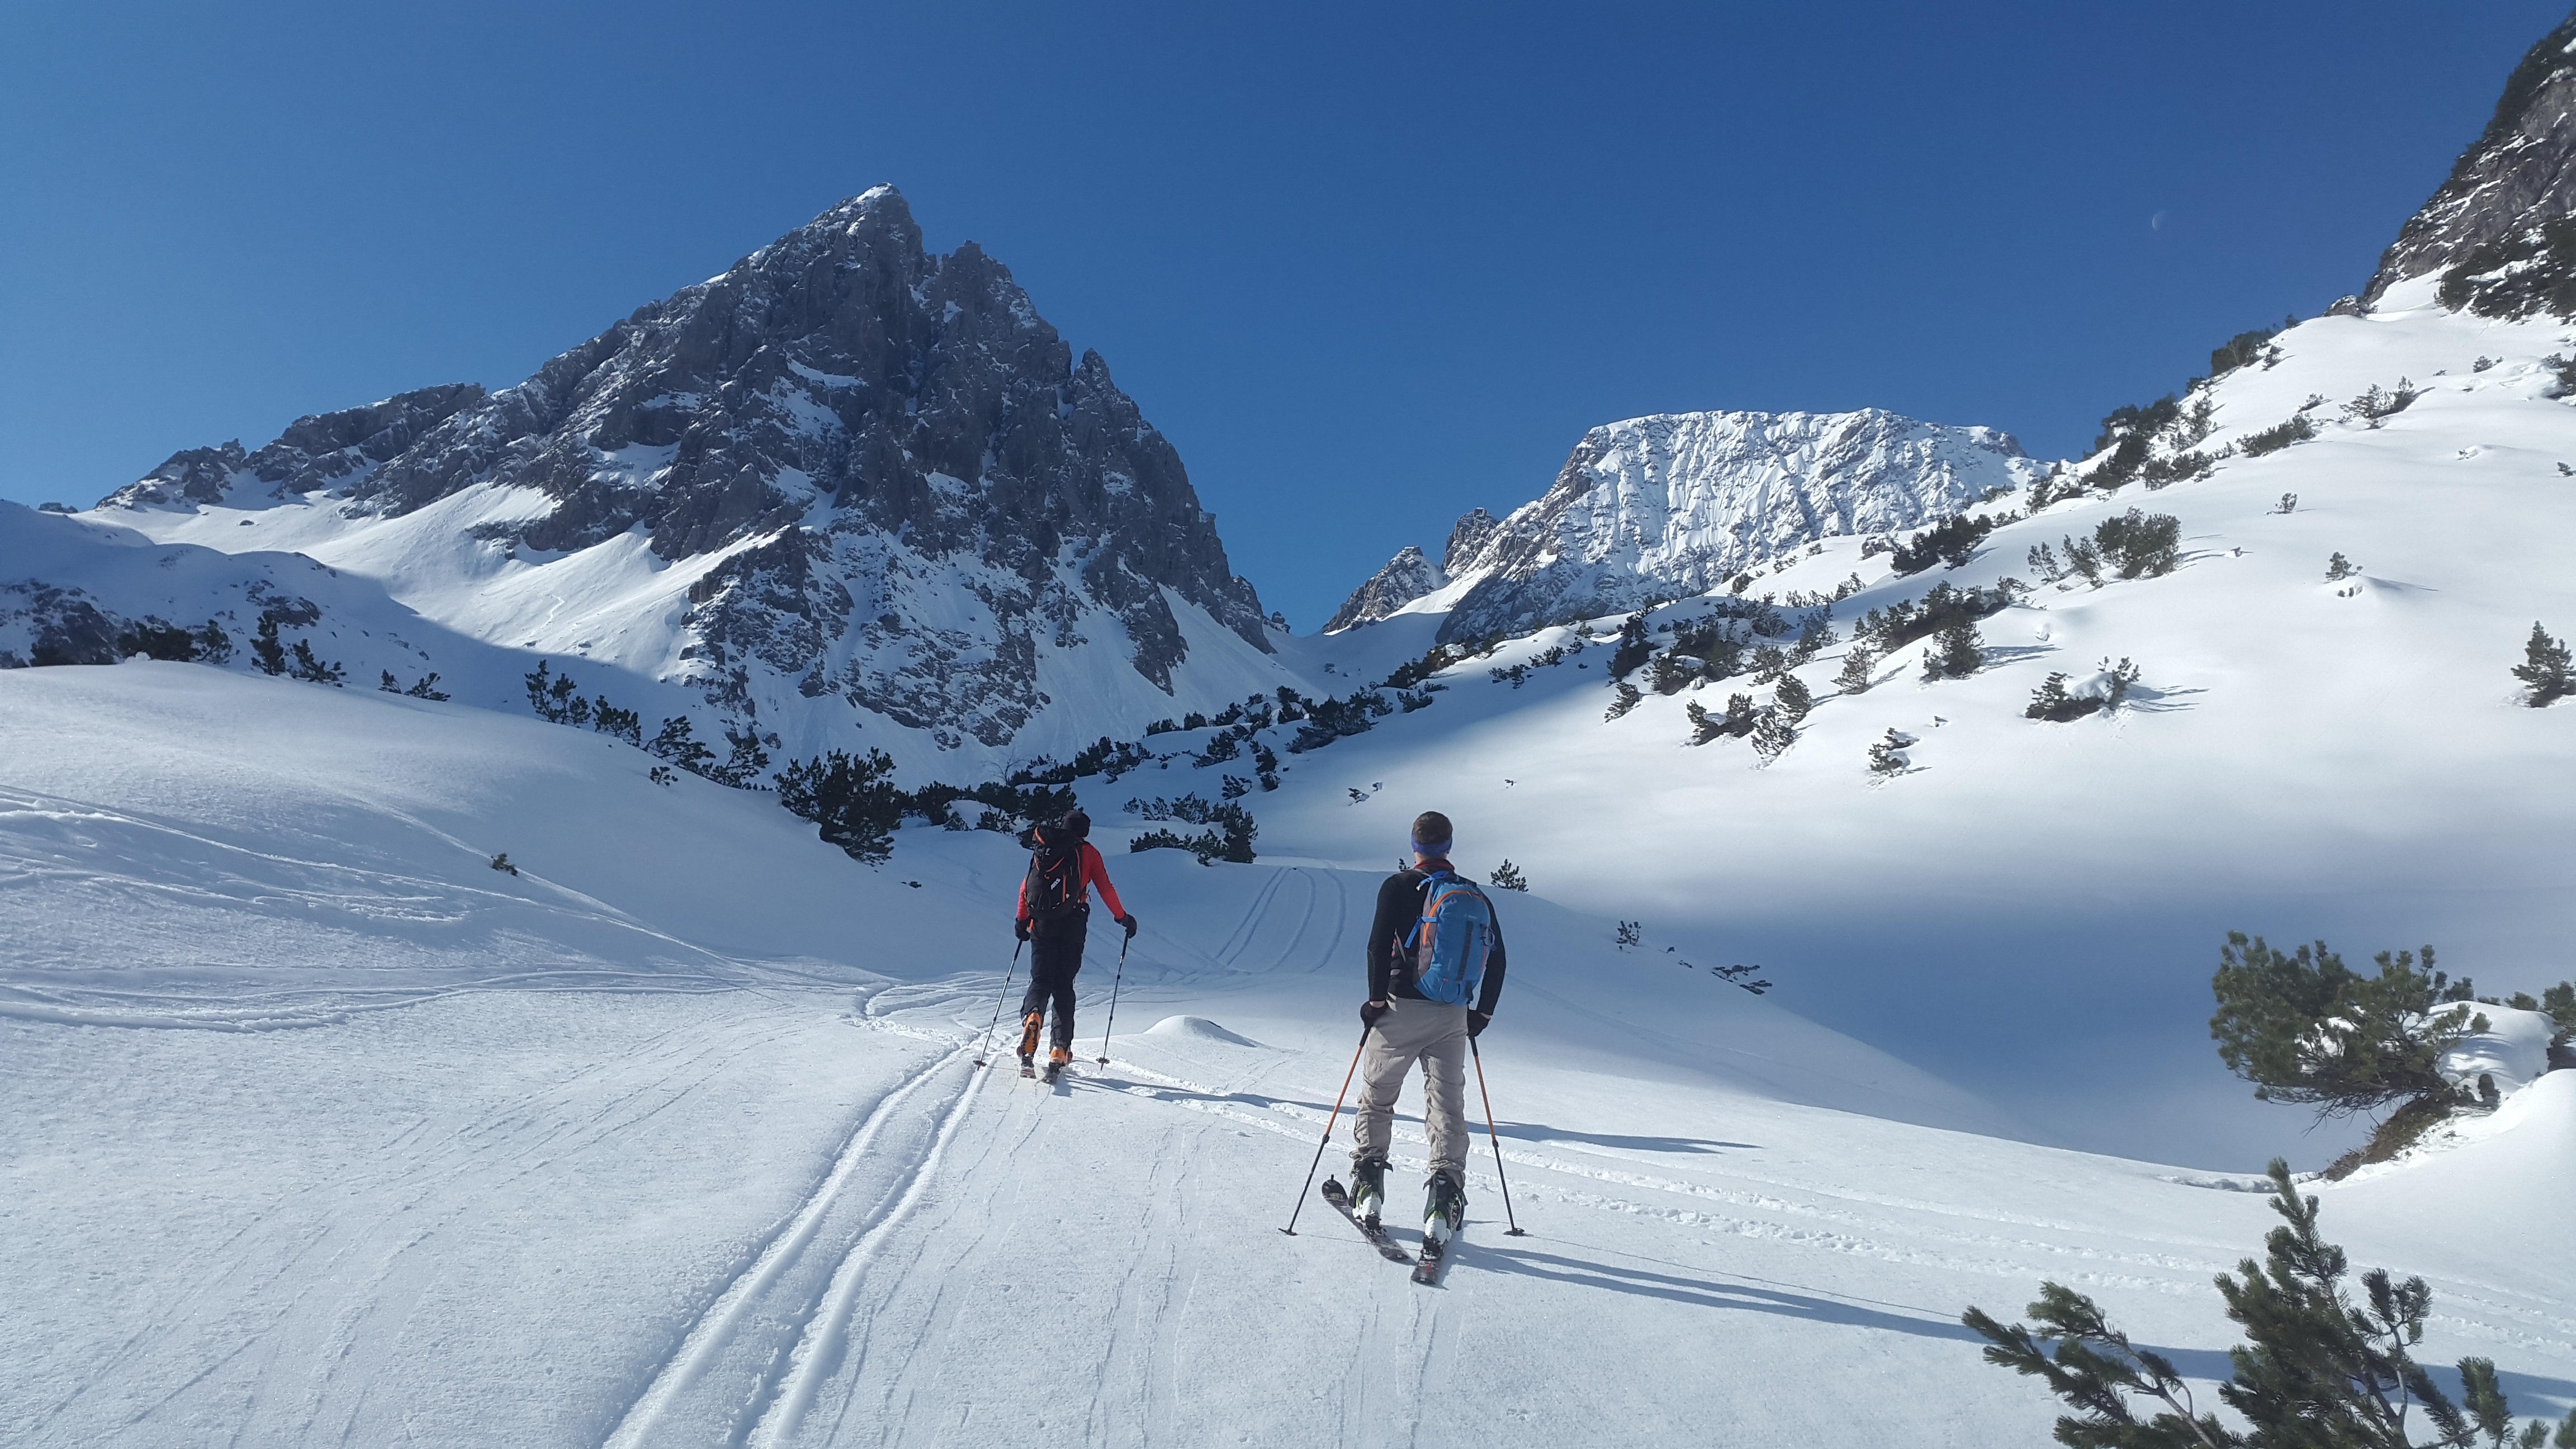 climbing, sports, skiing, mountain, mountaineering, snow, winter